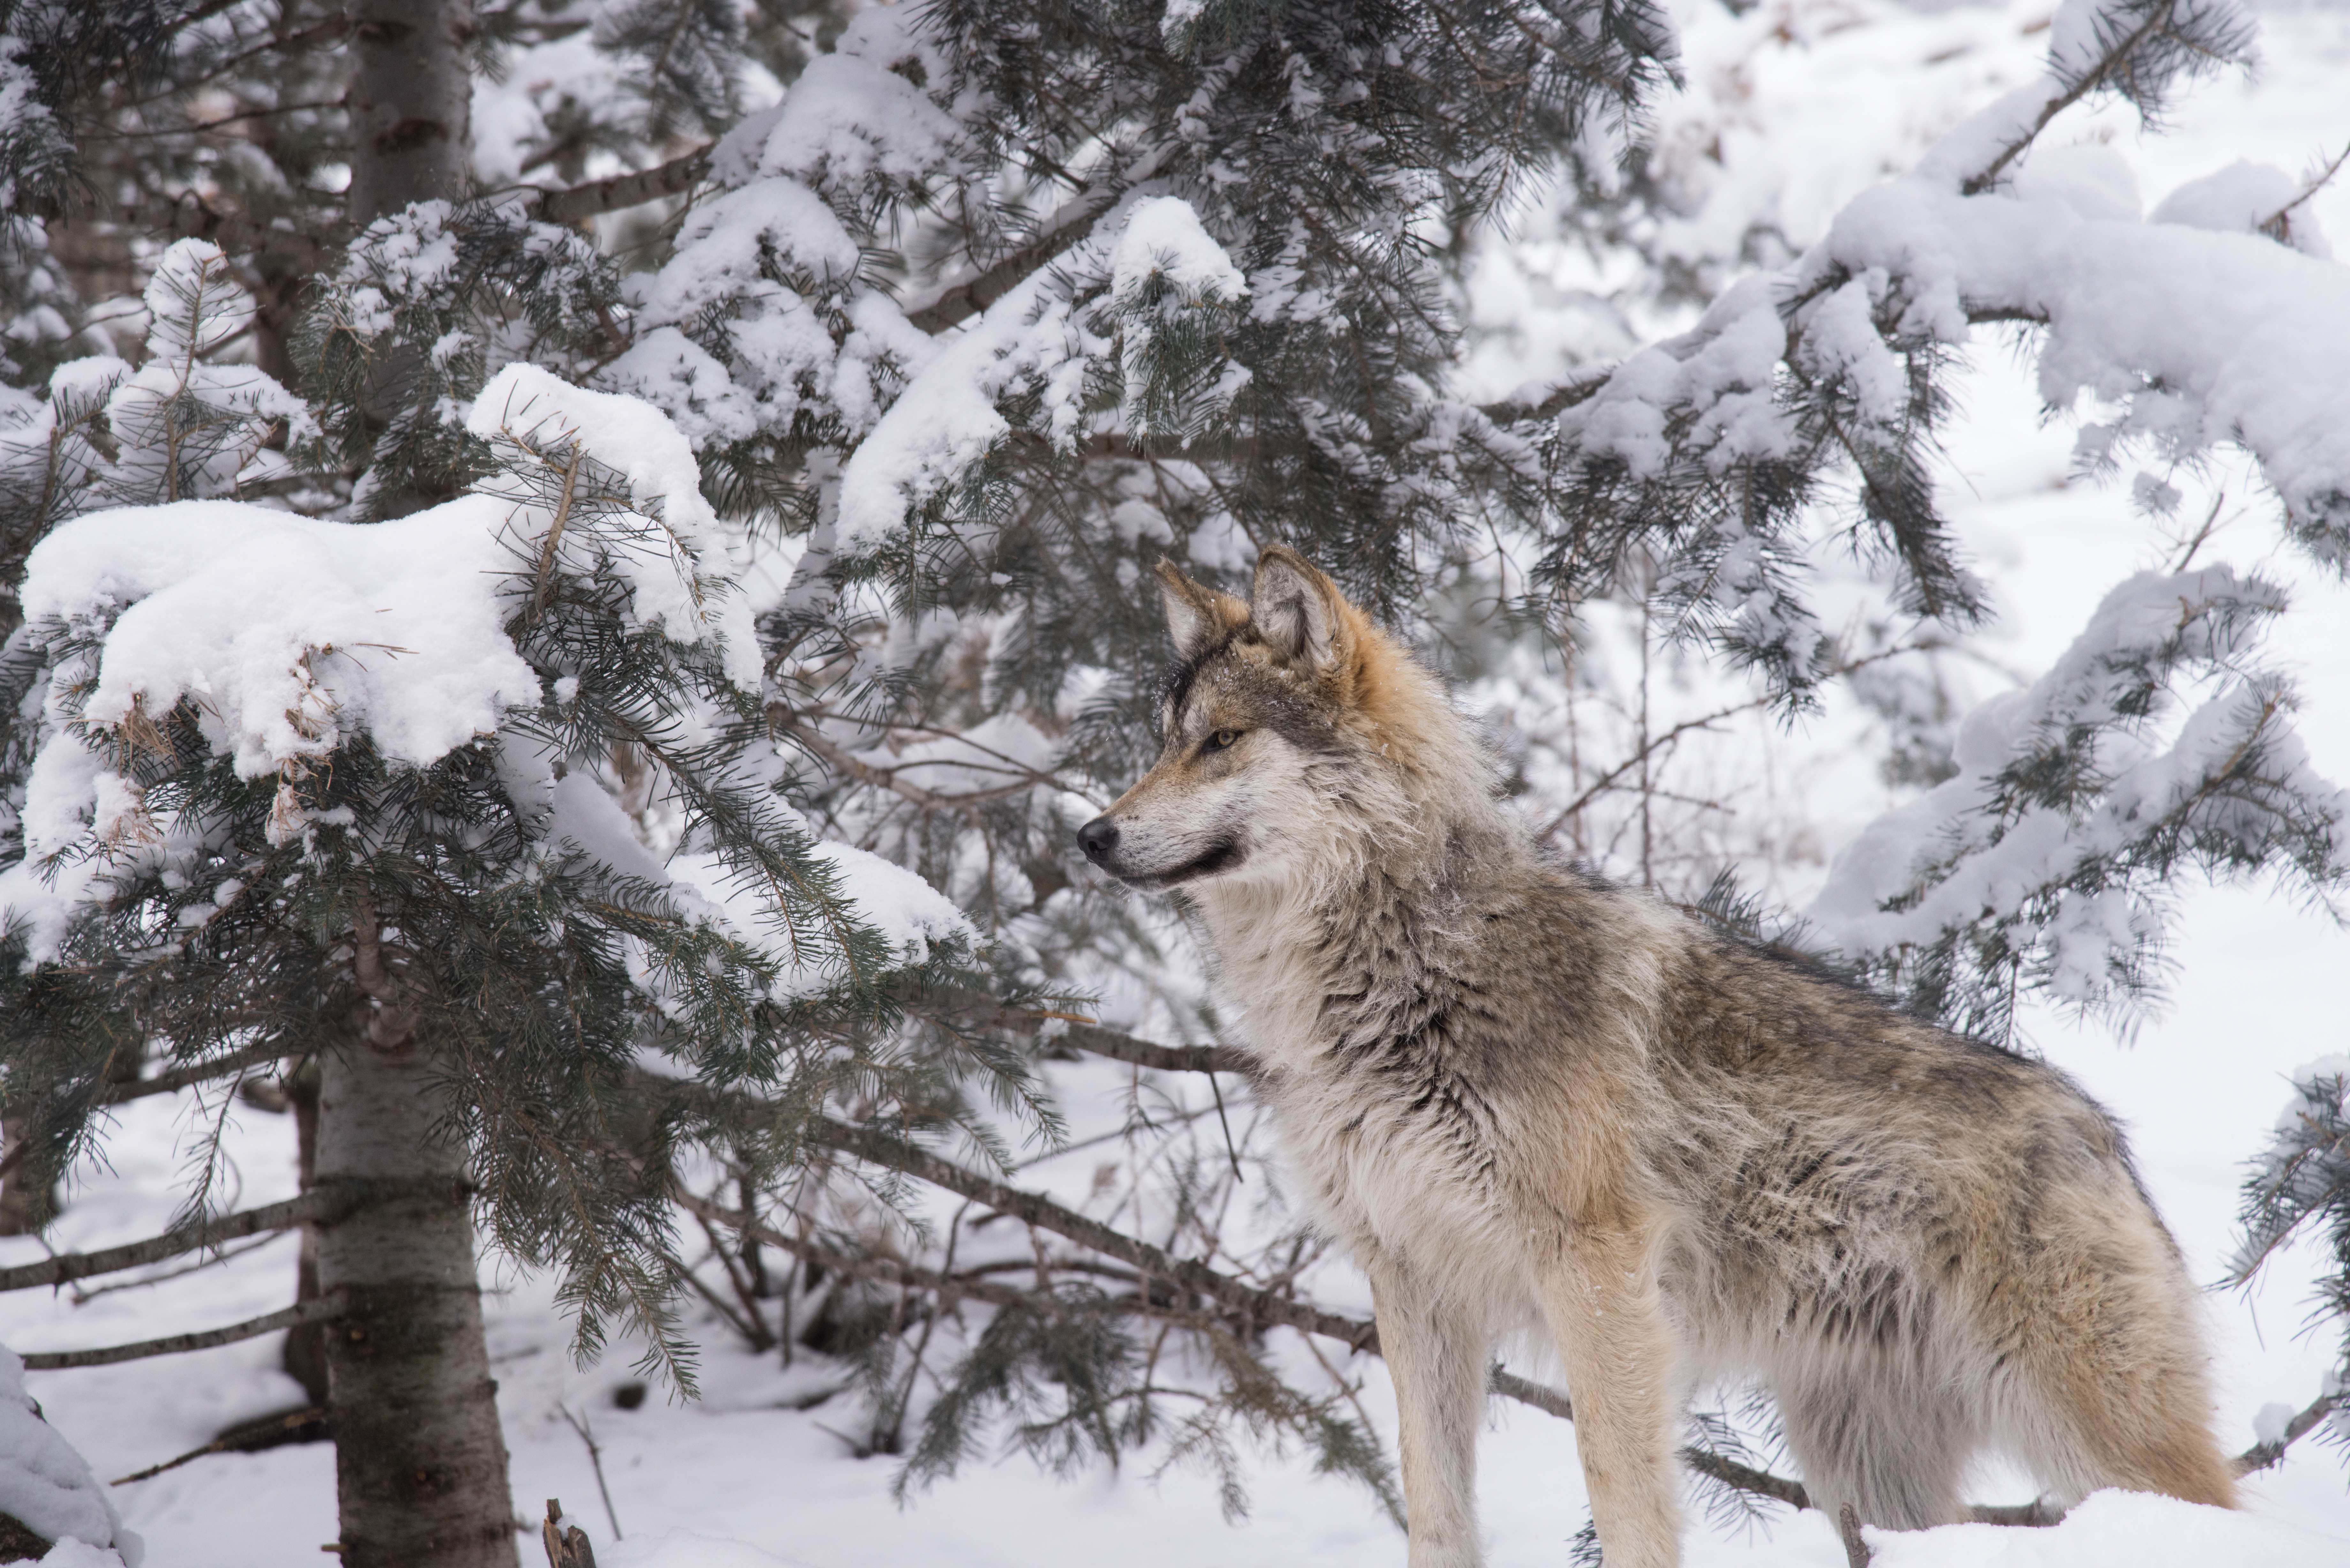 Mexican wolf in winter scene